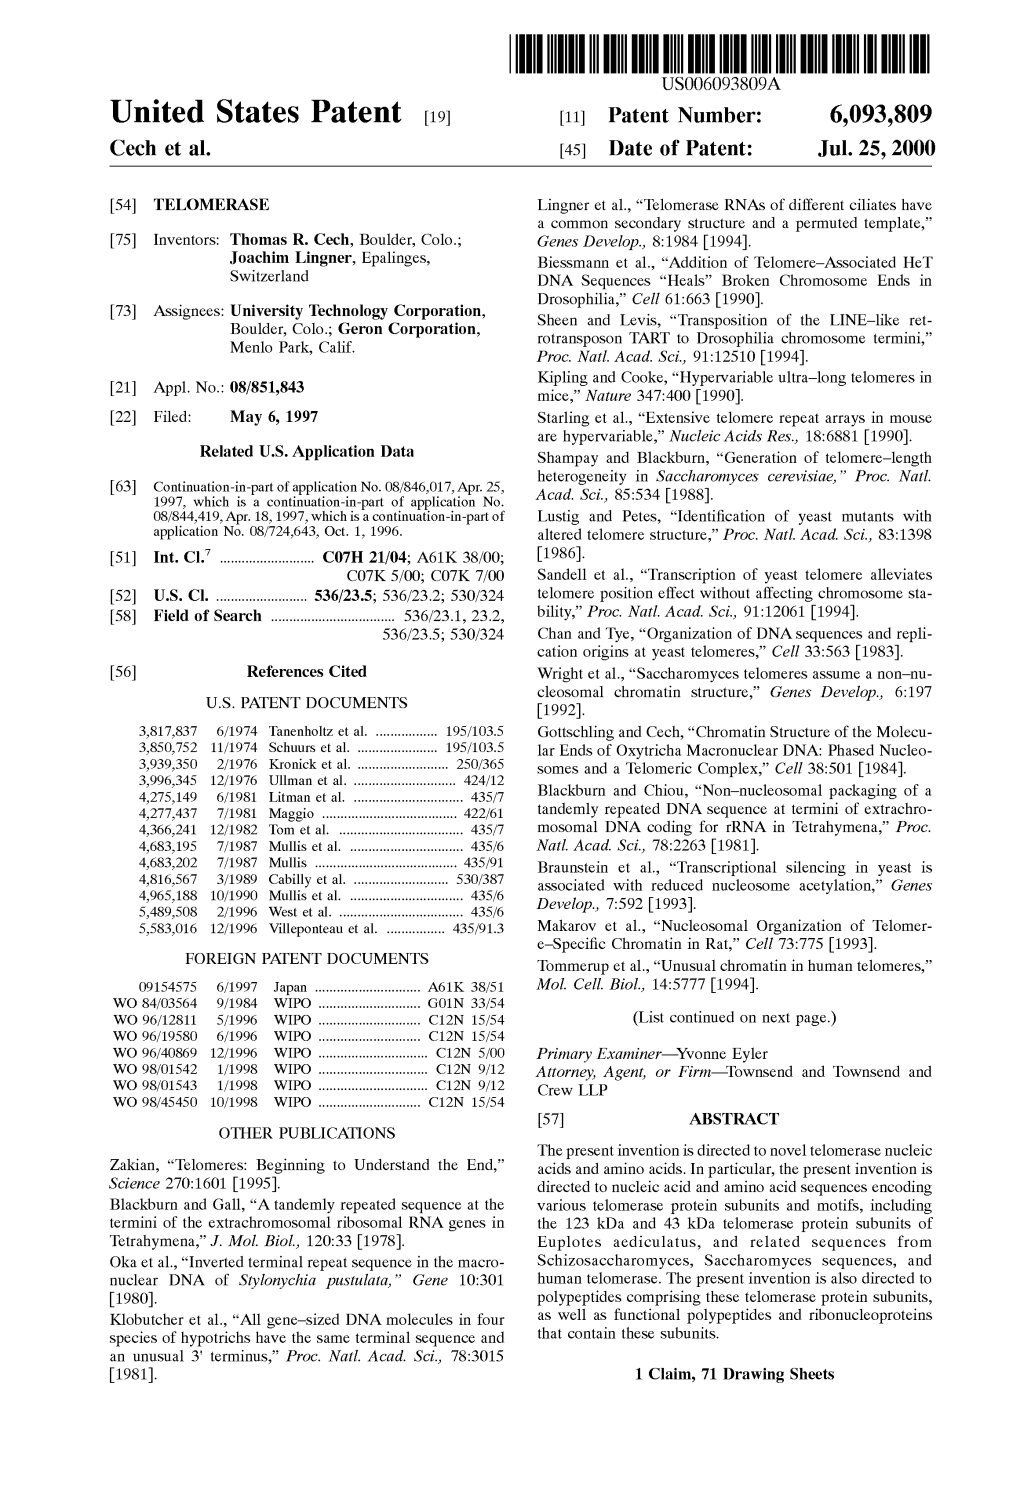 United States Patent (19) 11 Patent Number: 6,093,809 Cech Et Al